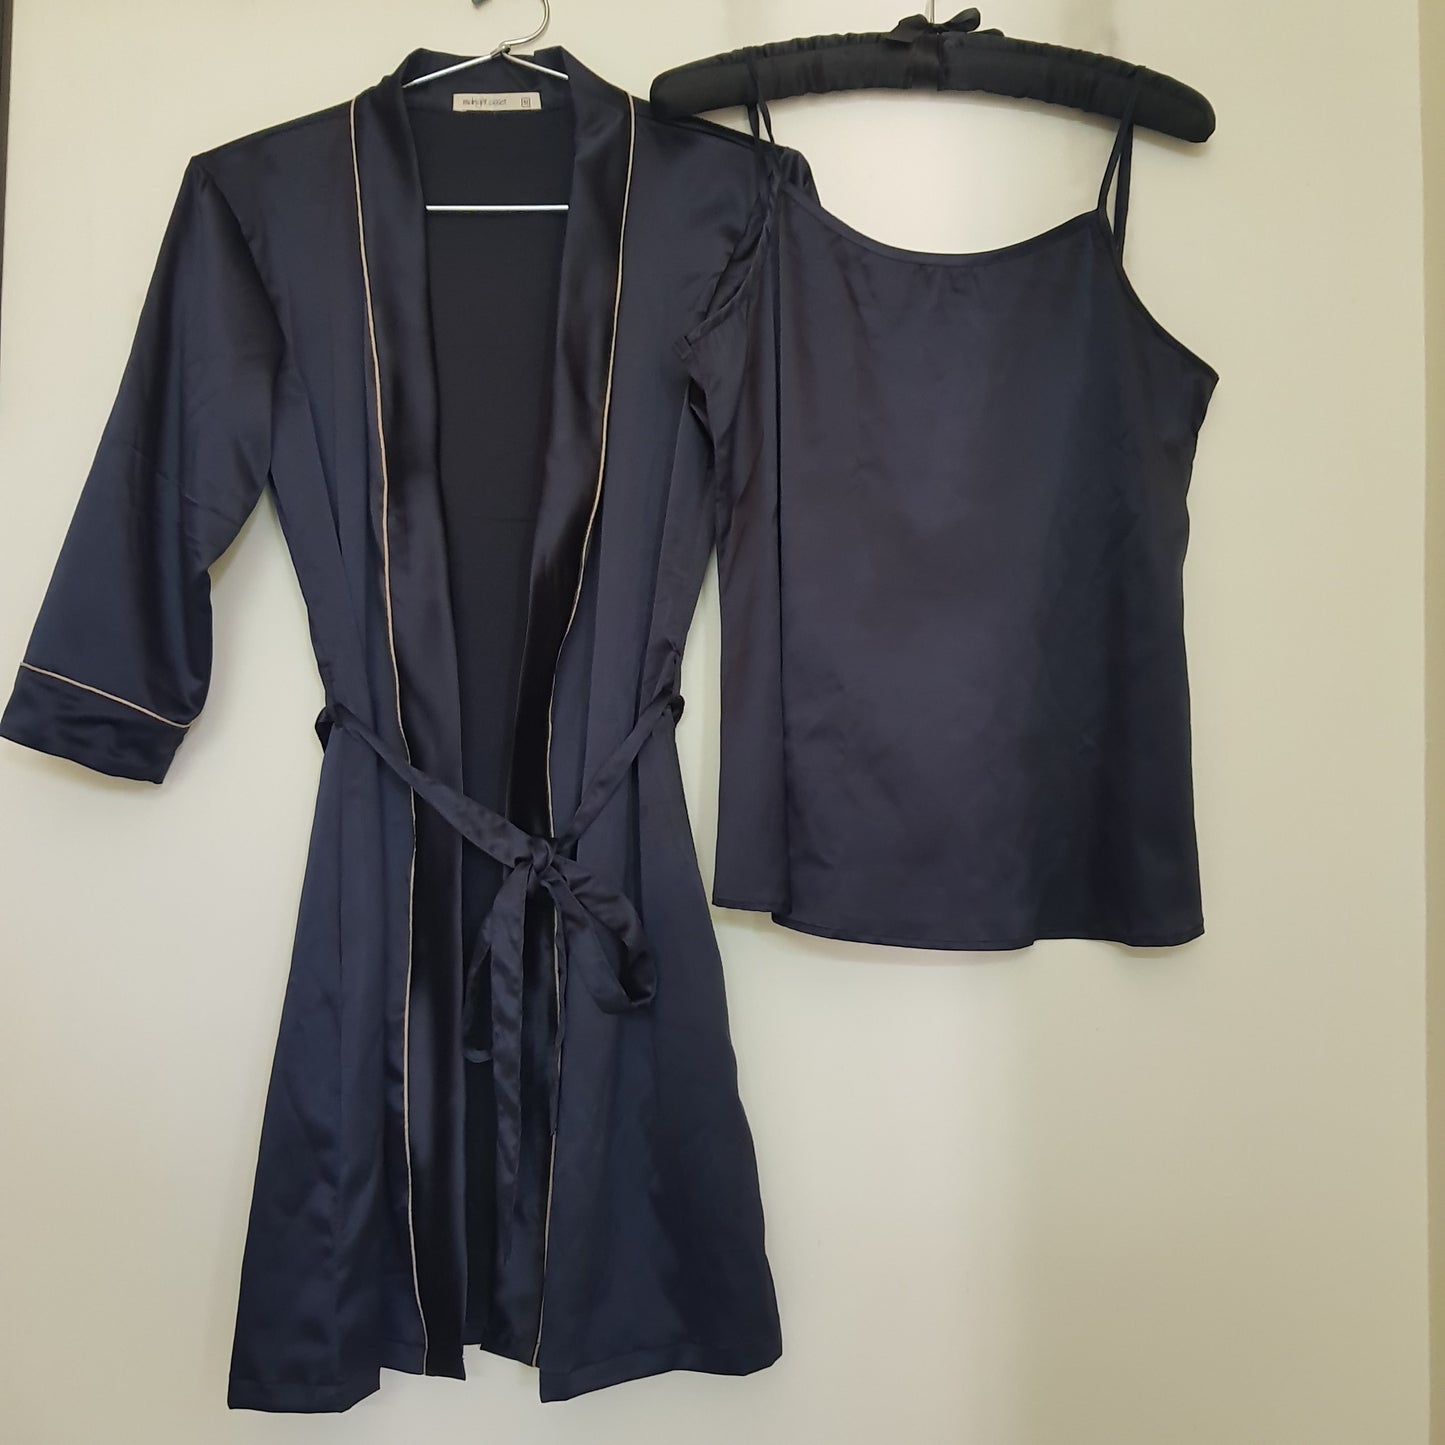 Black satin Robe & camisol set